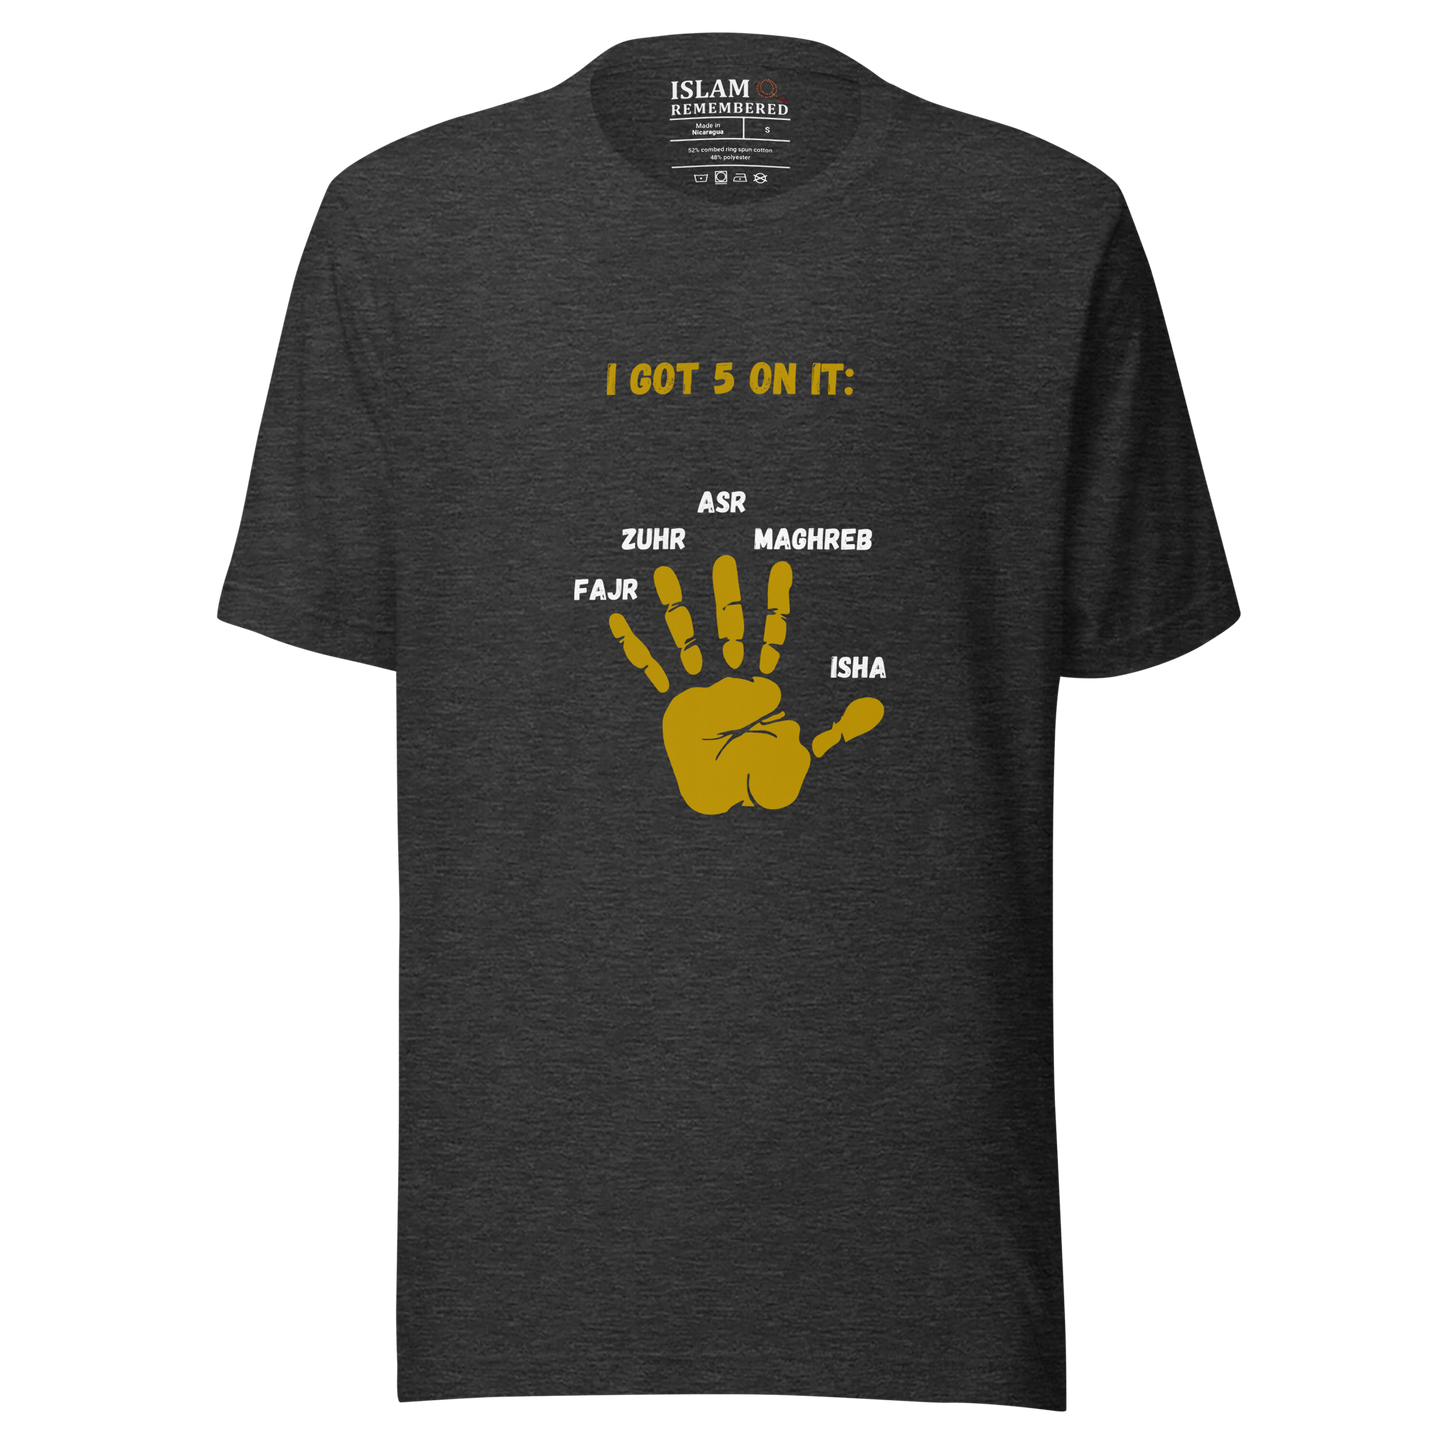 WOMEN's T-Shirt - I GOT 5 ON IT - Gold/Black